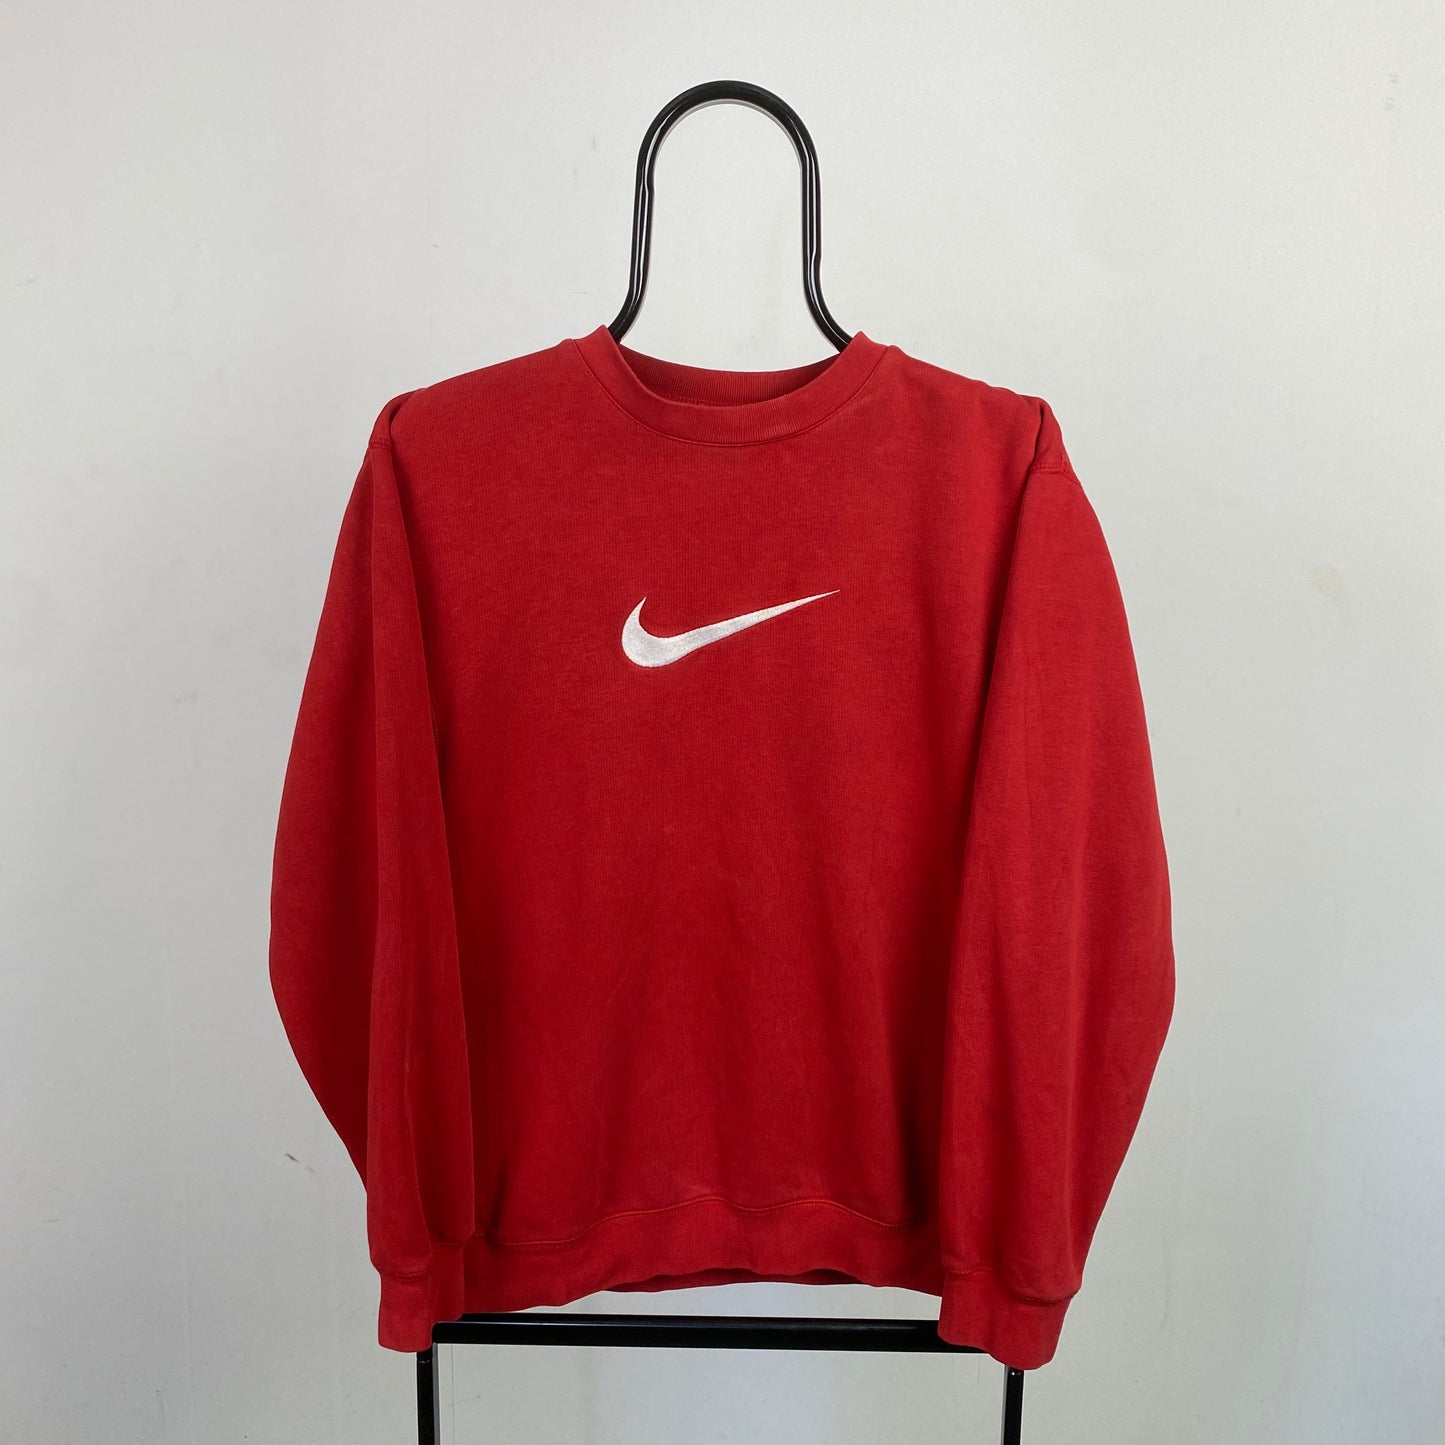 00s Nike Sweatshirt Red Small